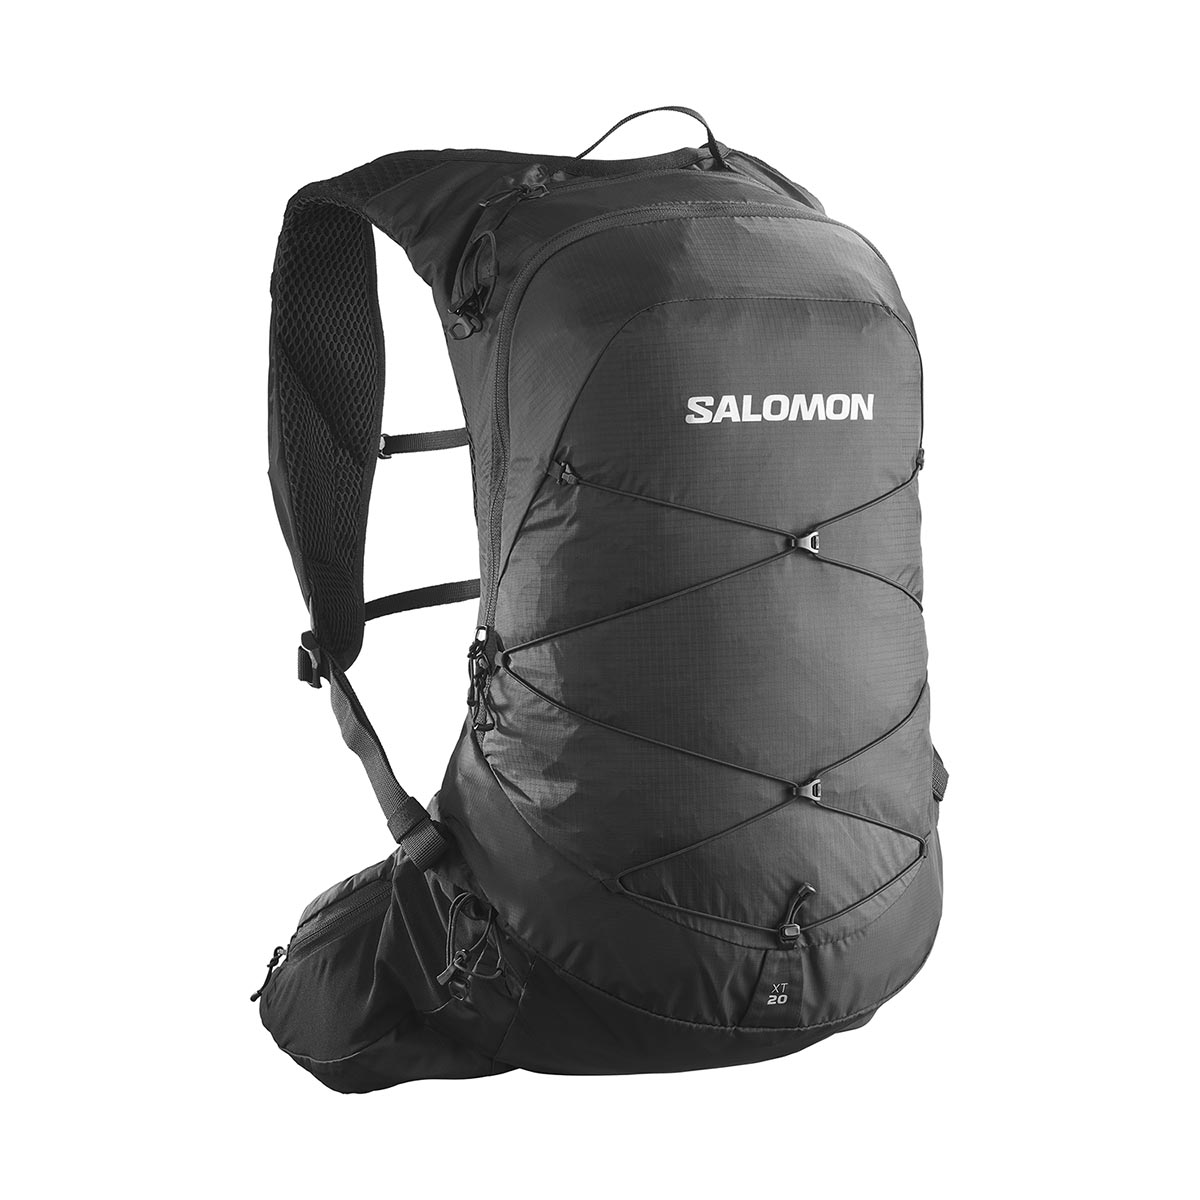 SALOMON - XT 20 BACKPACK